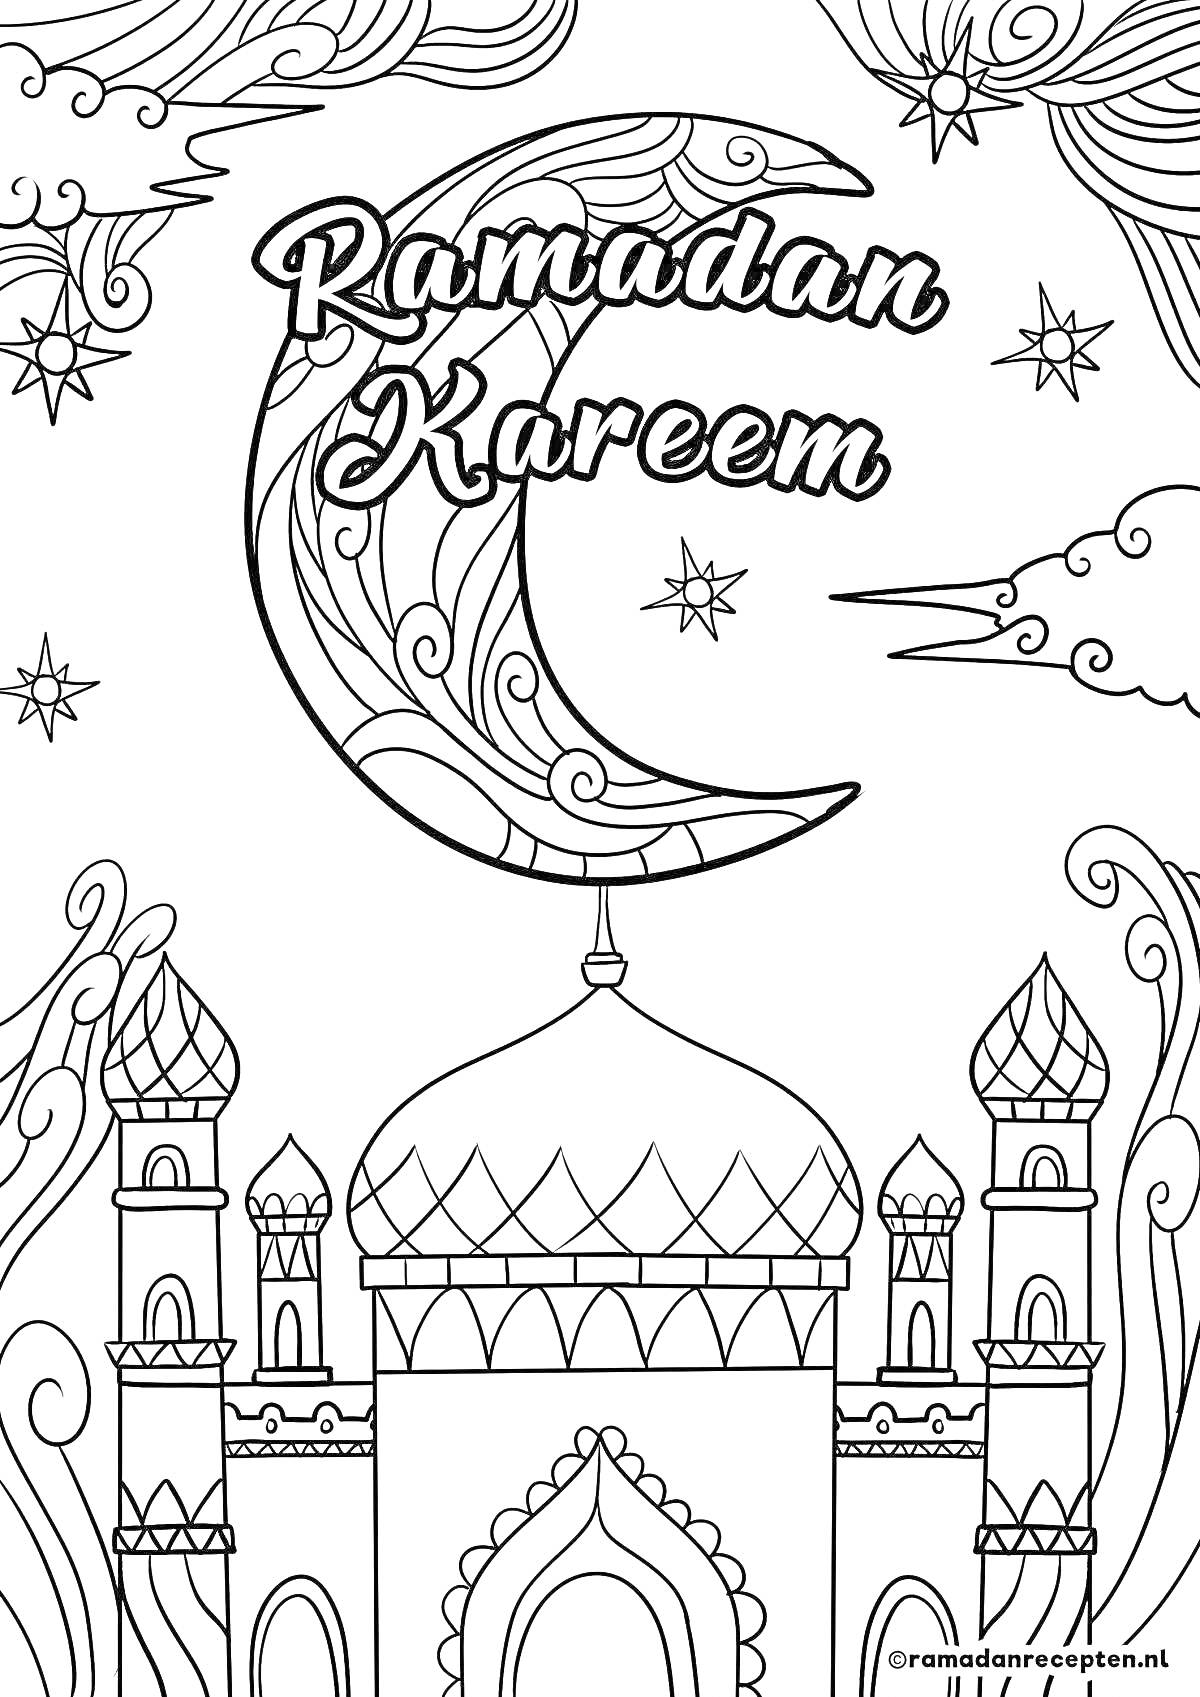 Раскраска рамадан карим с полумесяцем, звёздами и мечетью